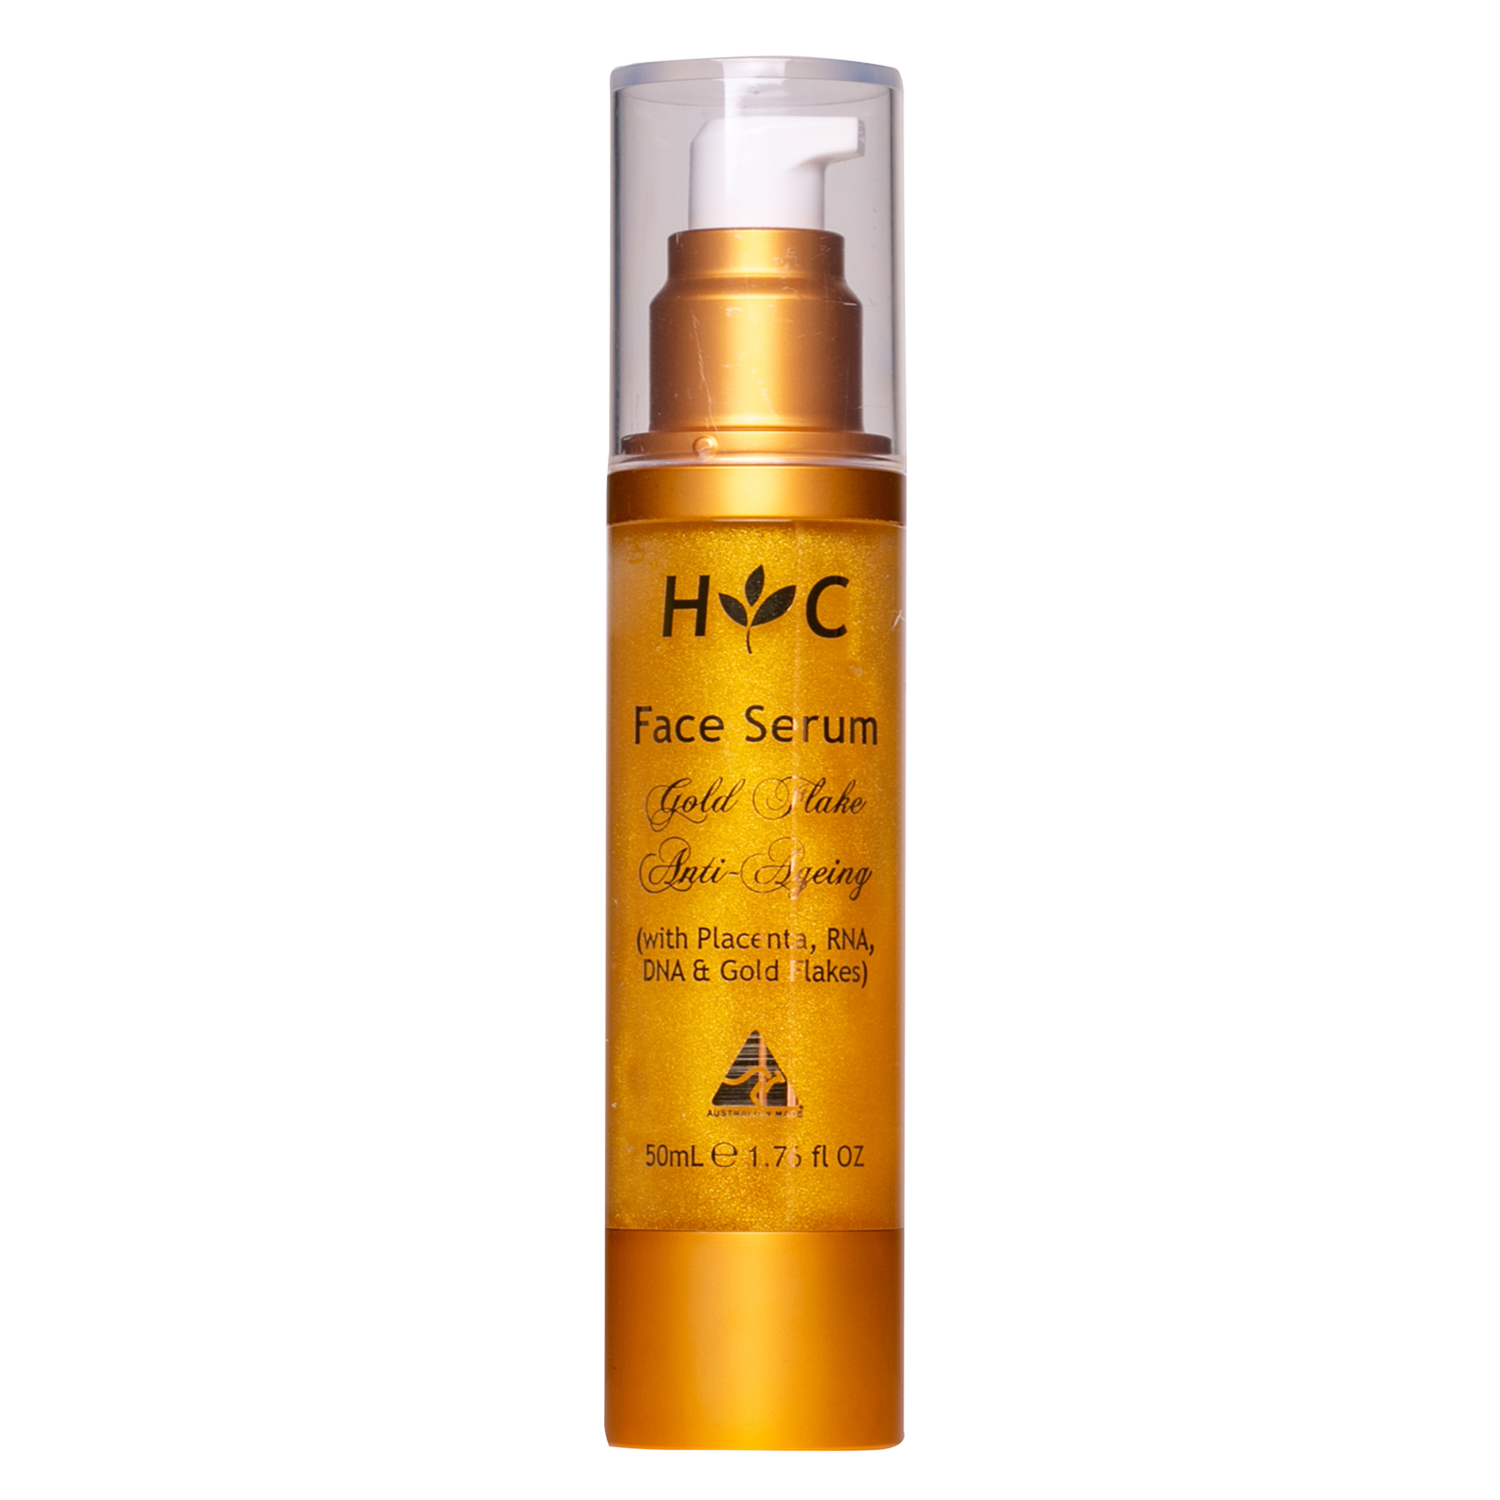 A bottle of Anti-Ageing Gold Flake Face Serum 50ml-Skin Care Masks & Peels-Healthy Care Australia